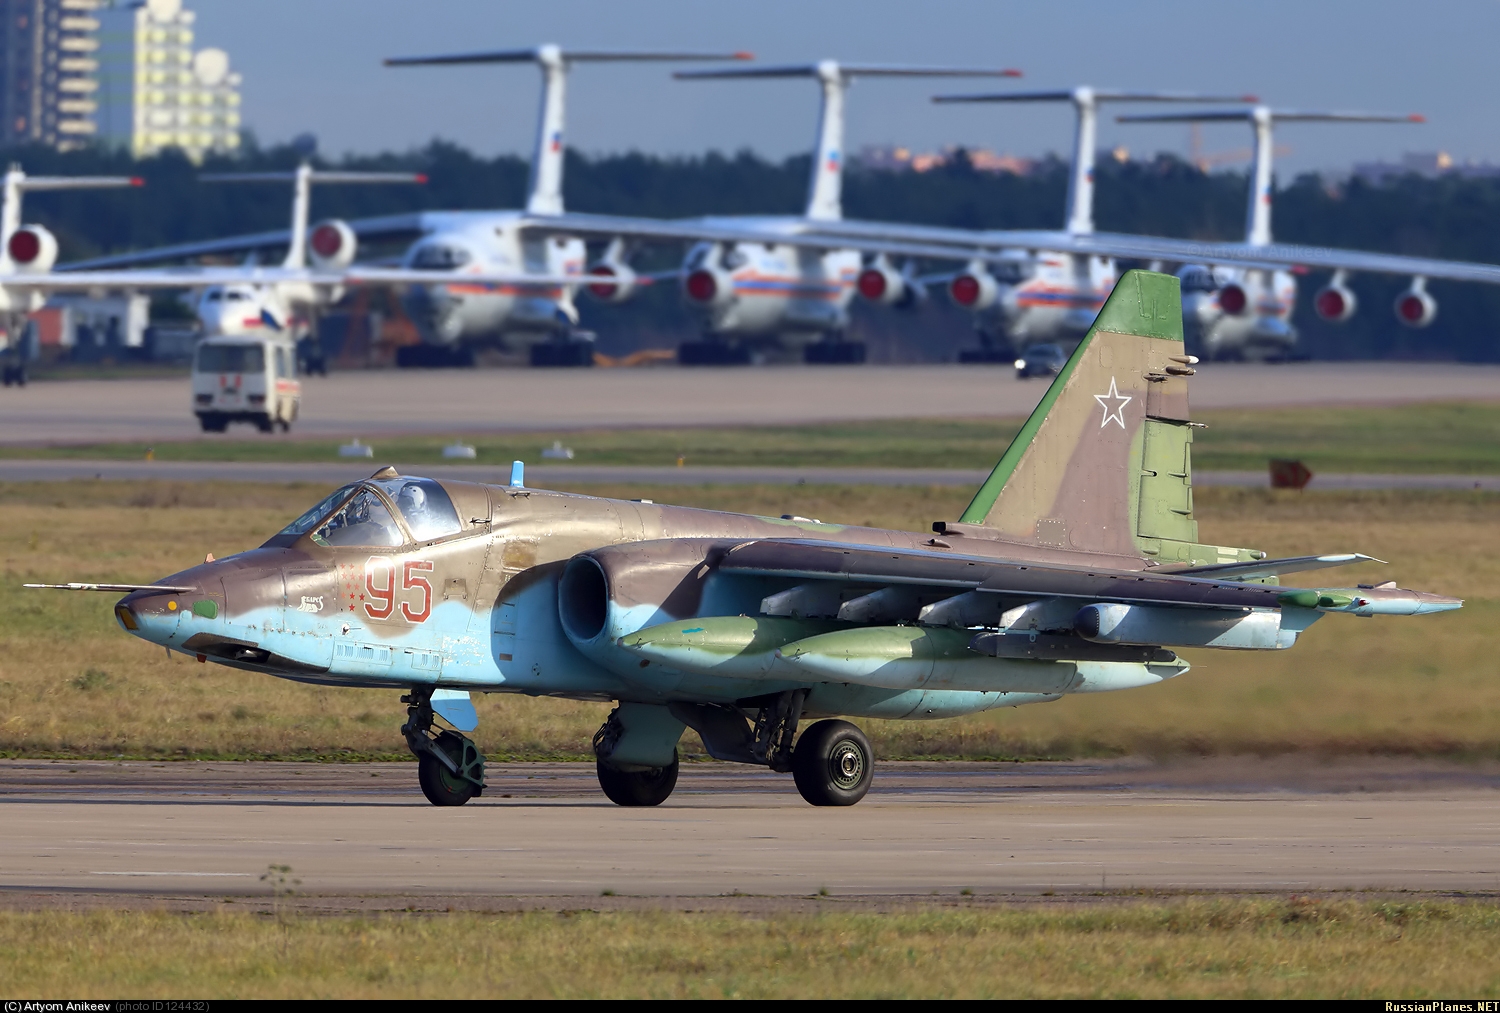 Su-25 attack aircraft  - Page 8 20206466258_9770d9c78a_o